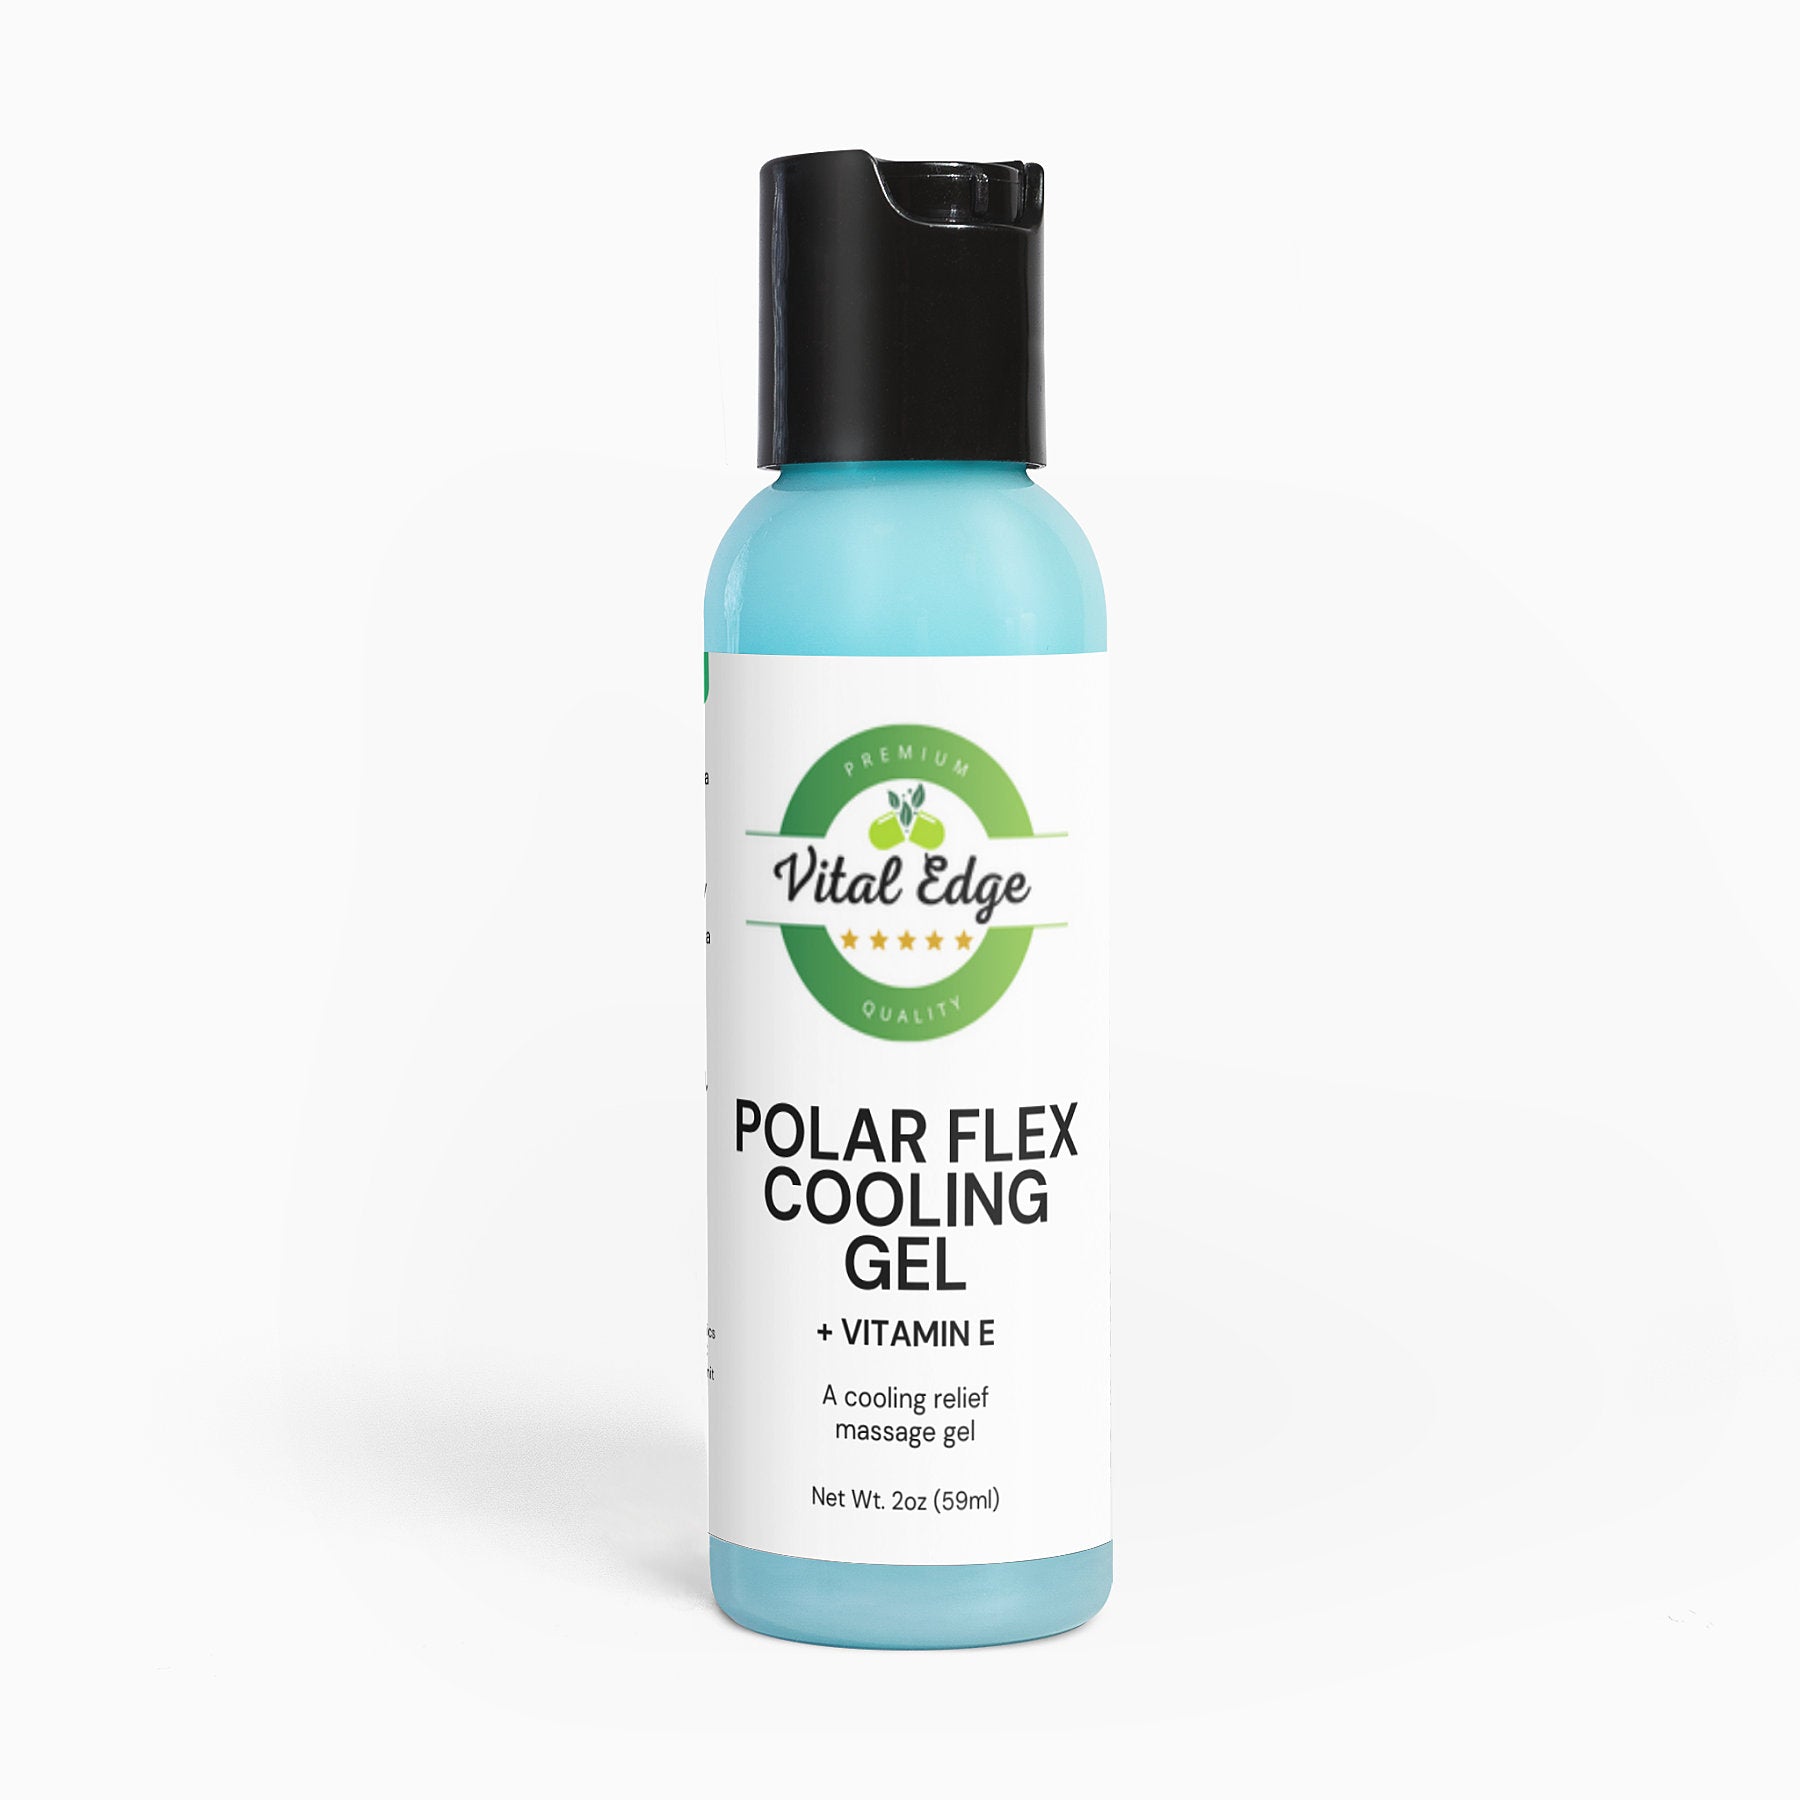 Polar Flex Cooling Gel